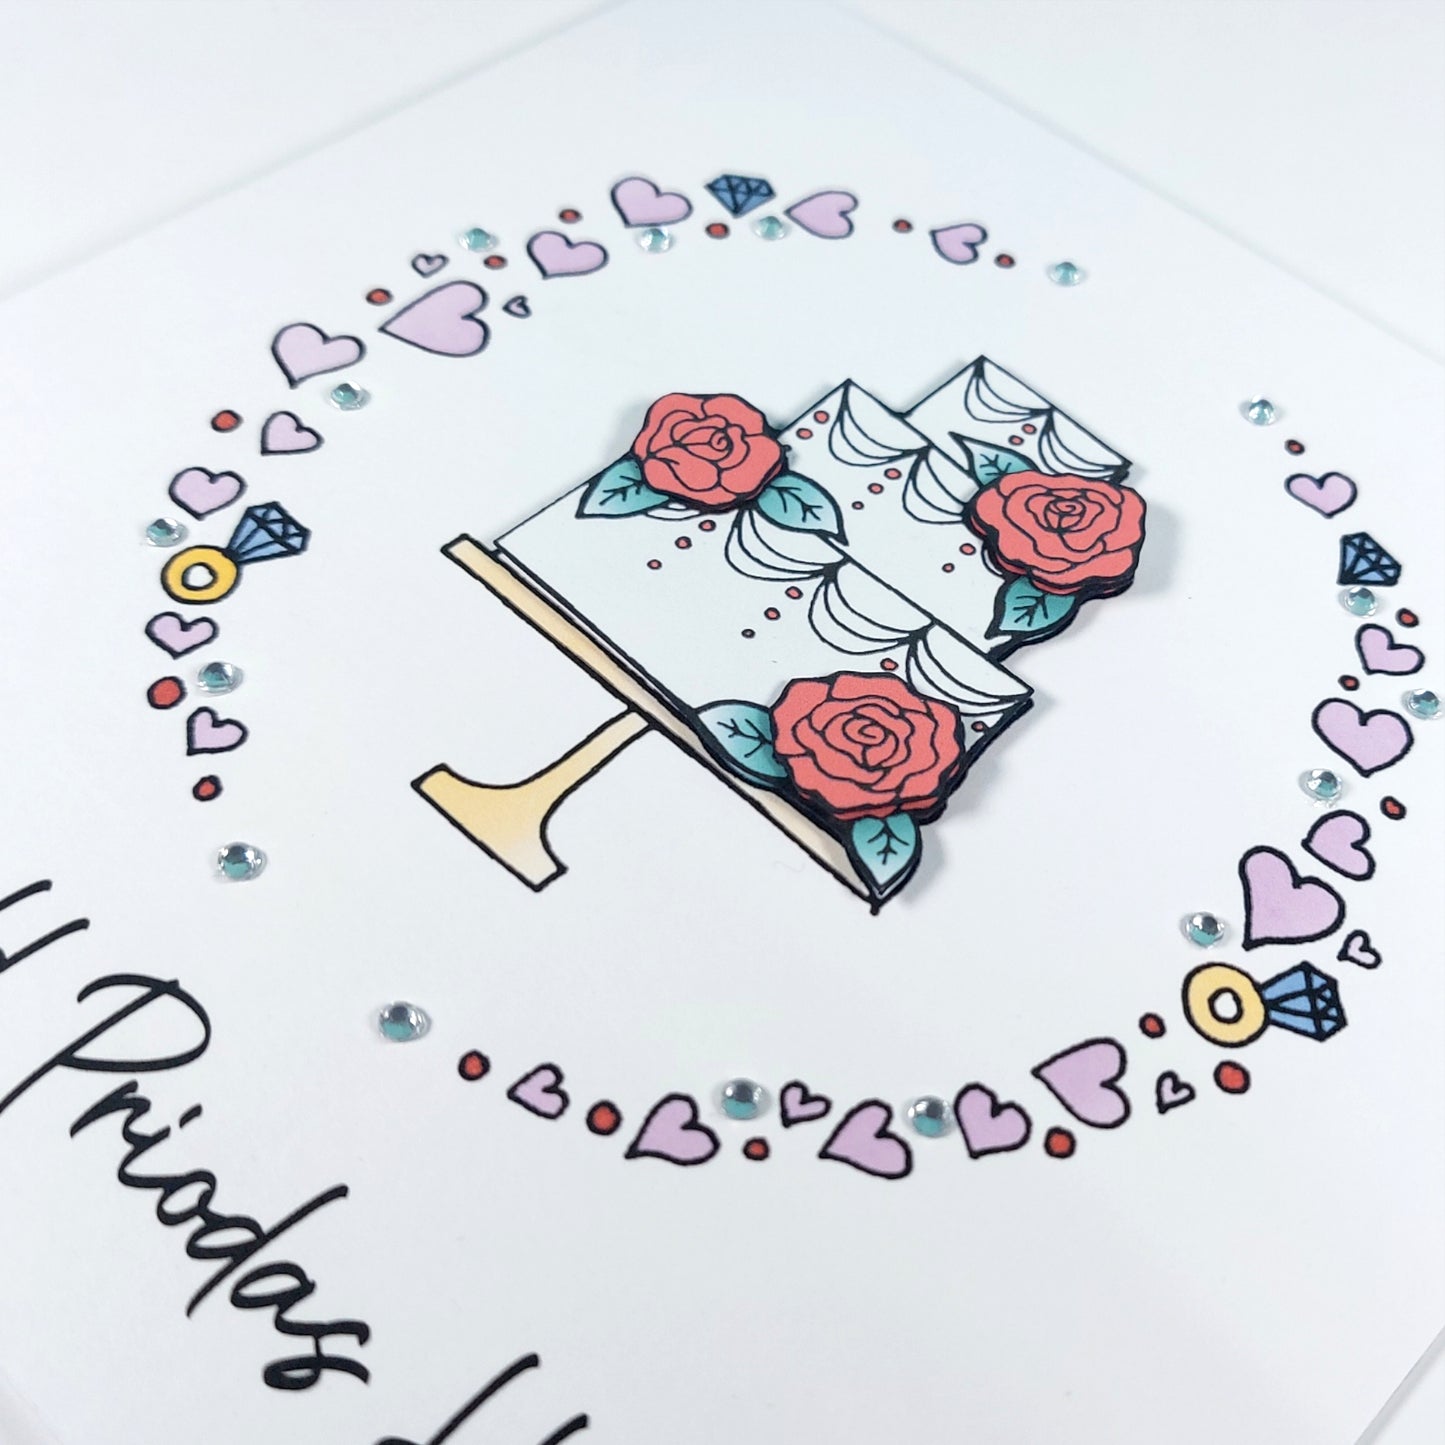 Penblwydd Priodas Hapus Card (Anniversary) Cake Pink Roses - Welsh Card